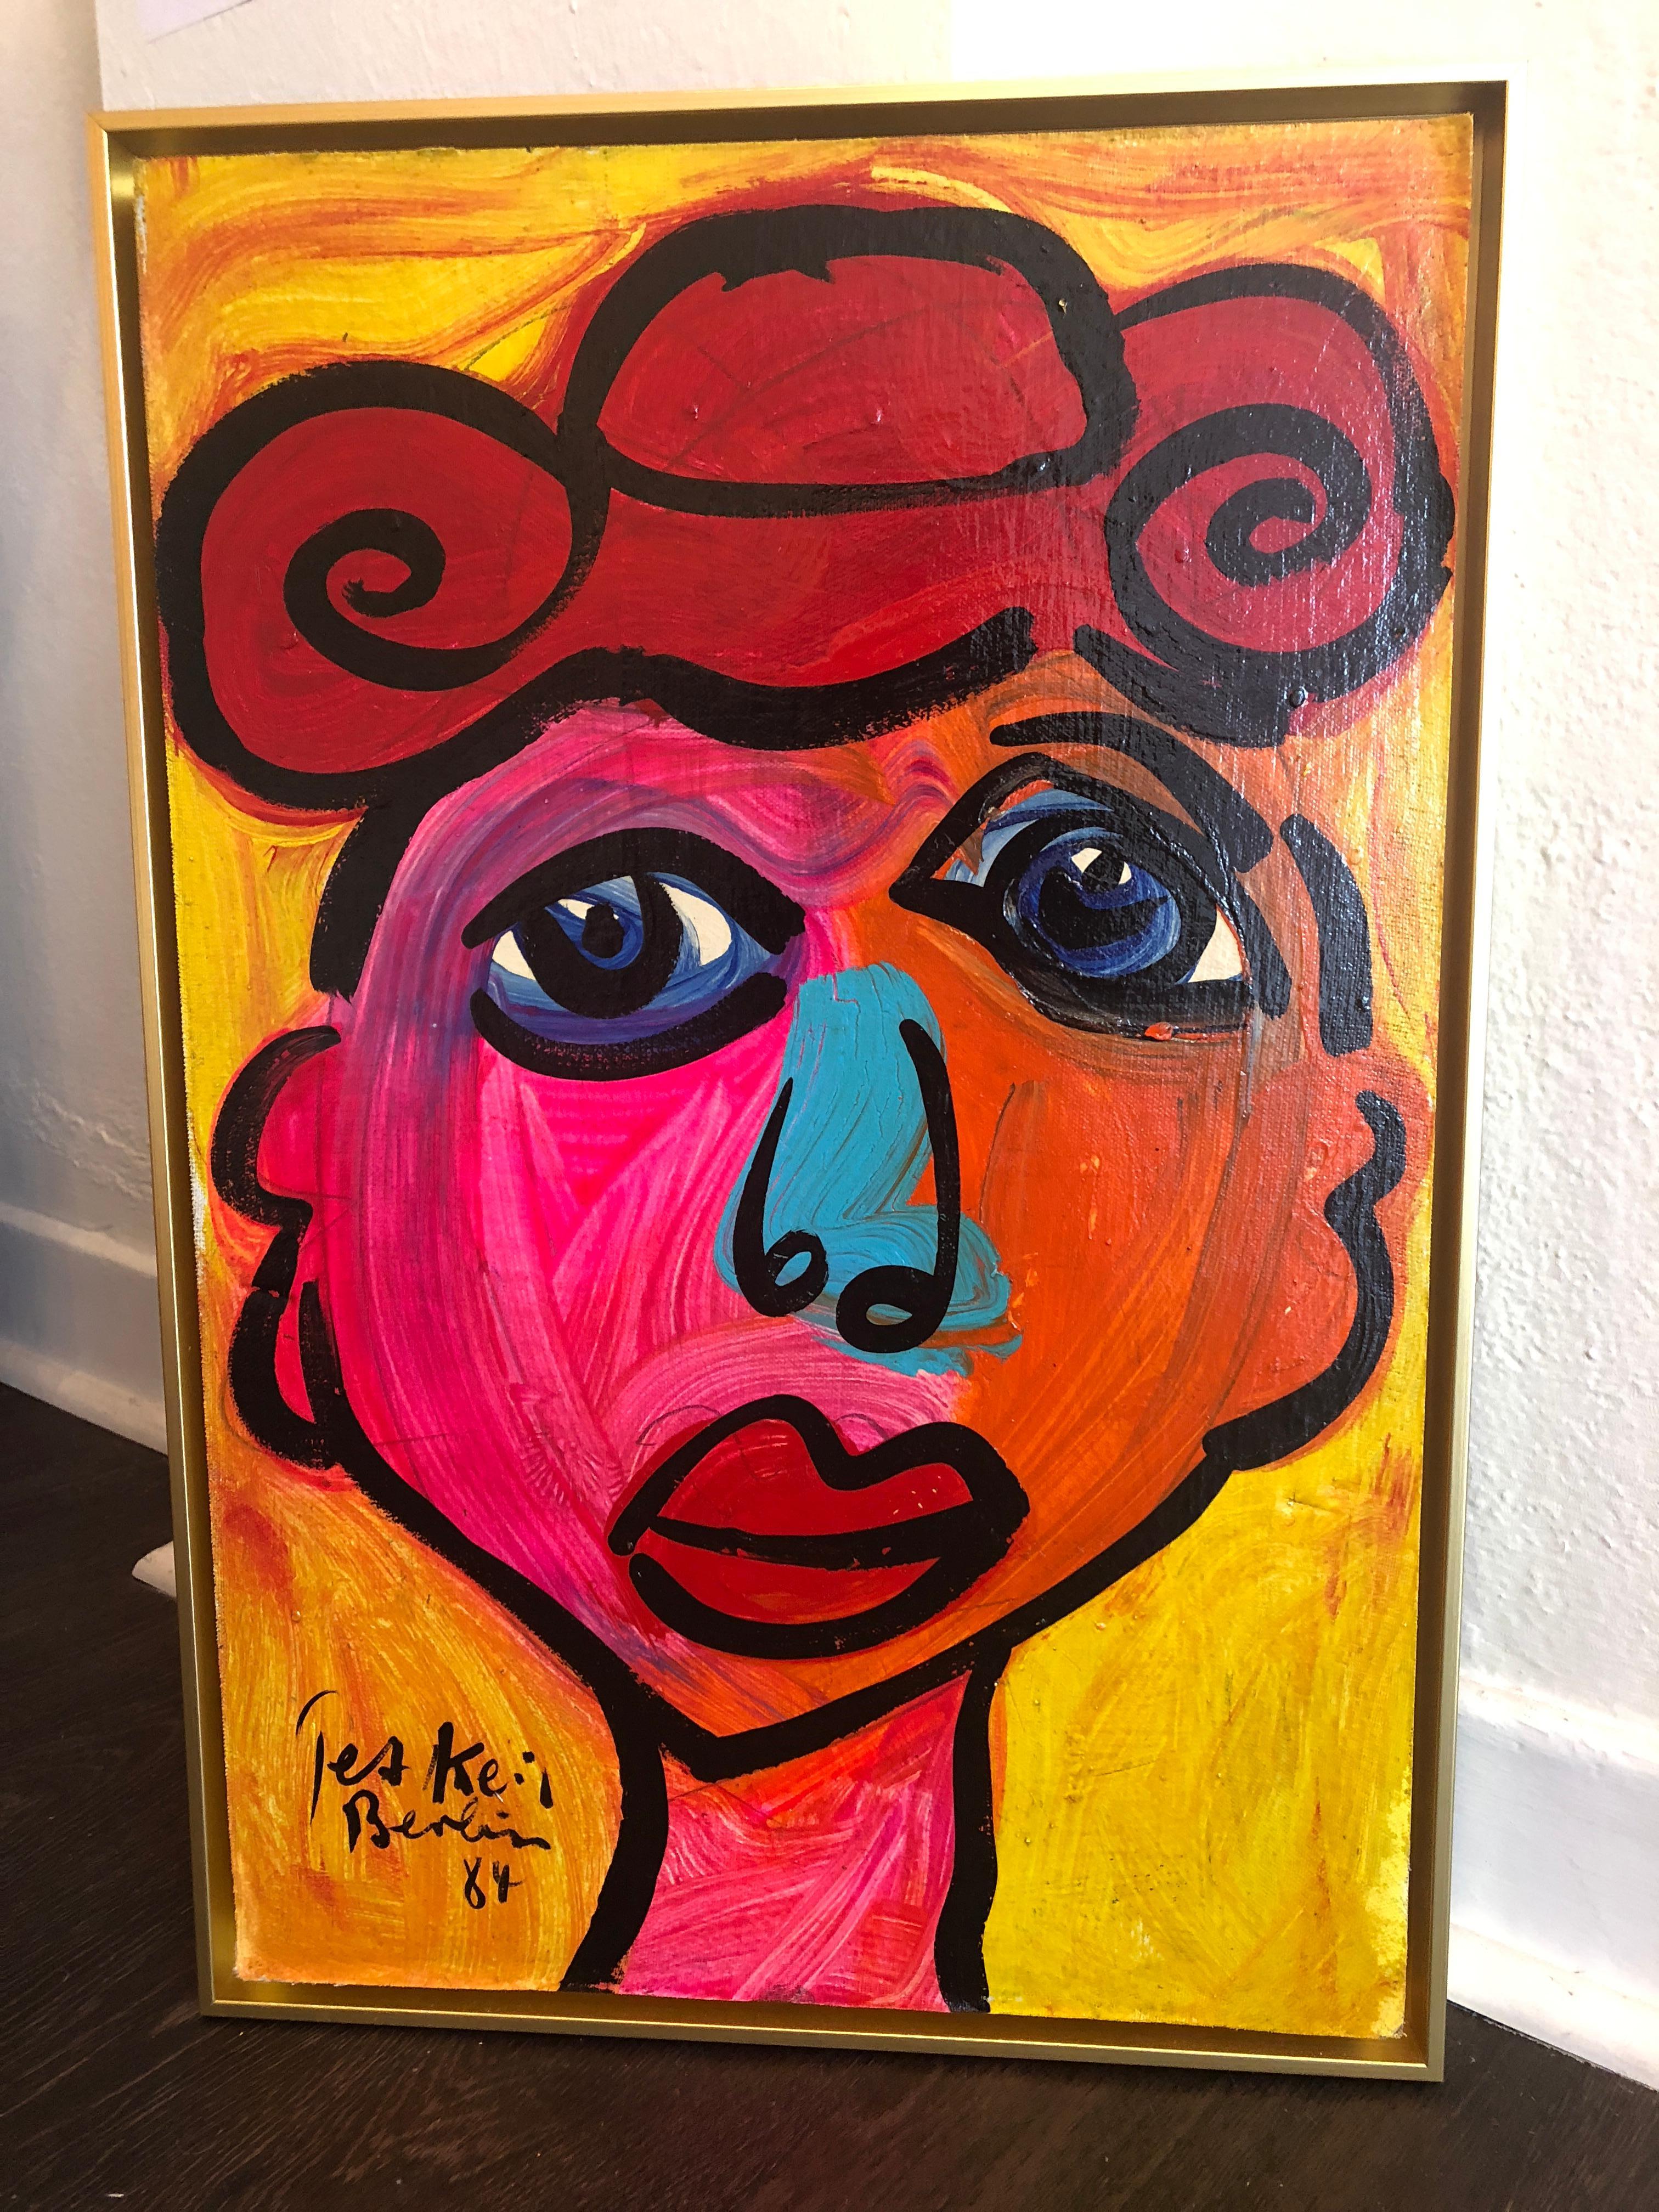 My Friend Pablo - Painting by Peter Robert Keil